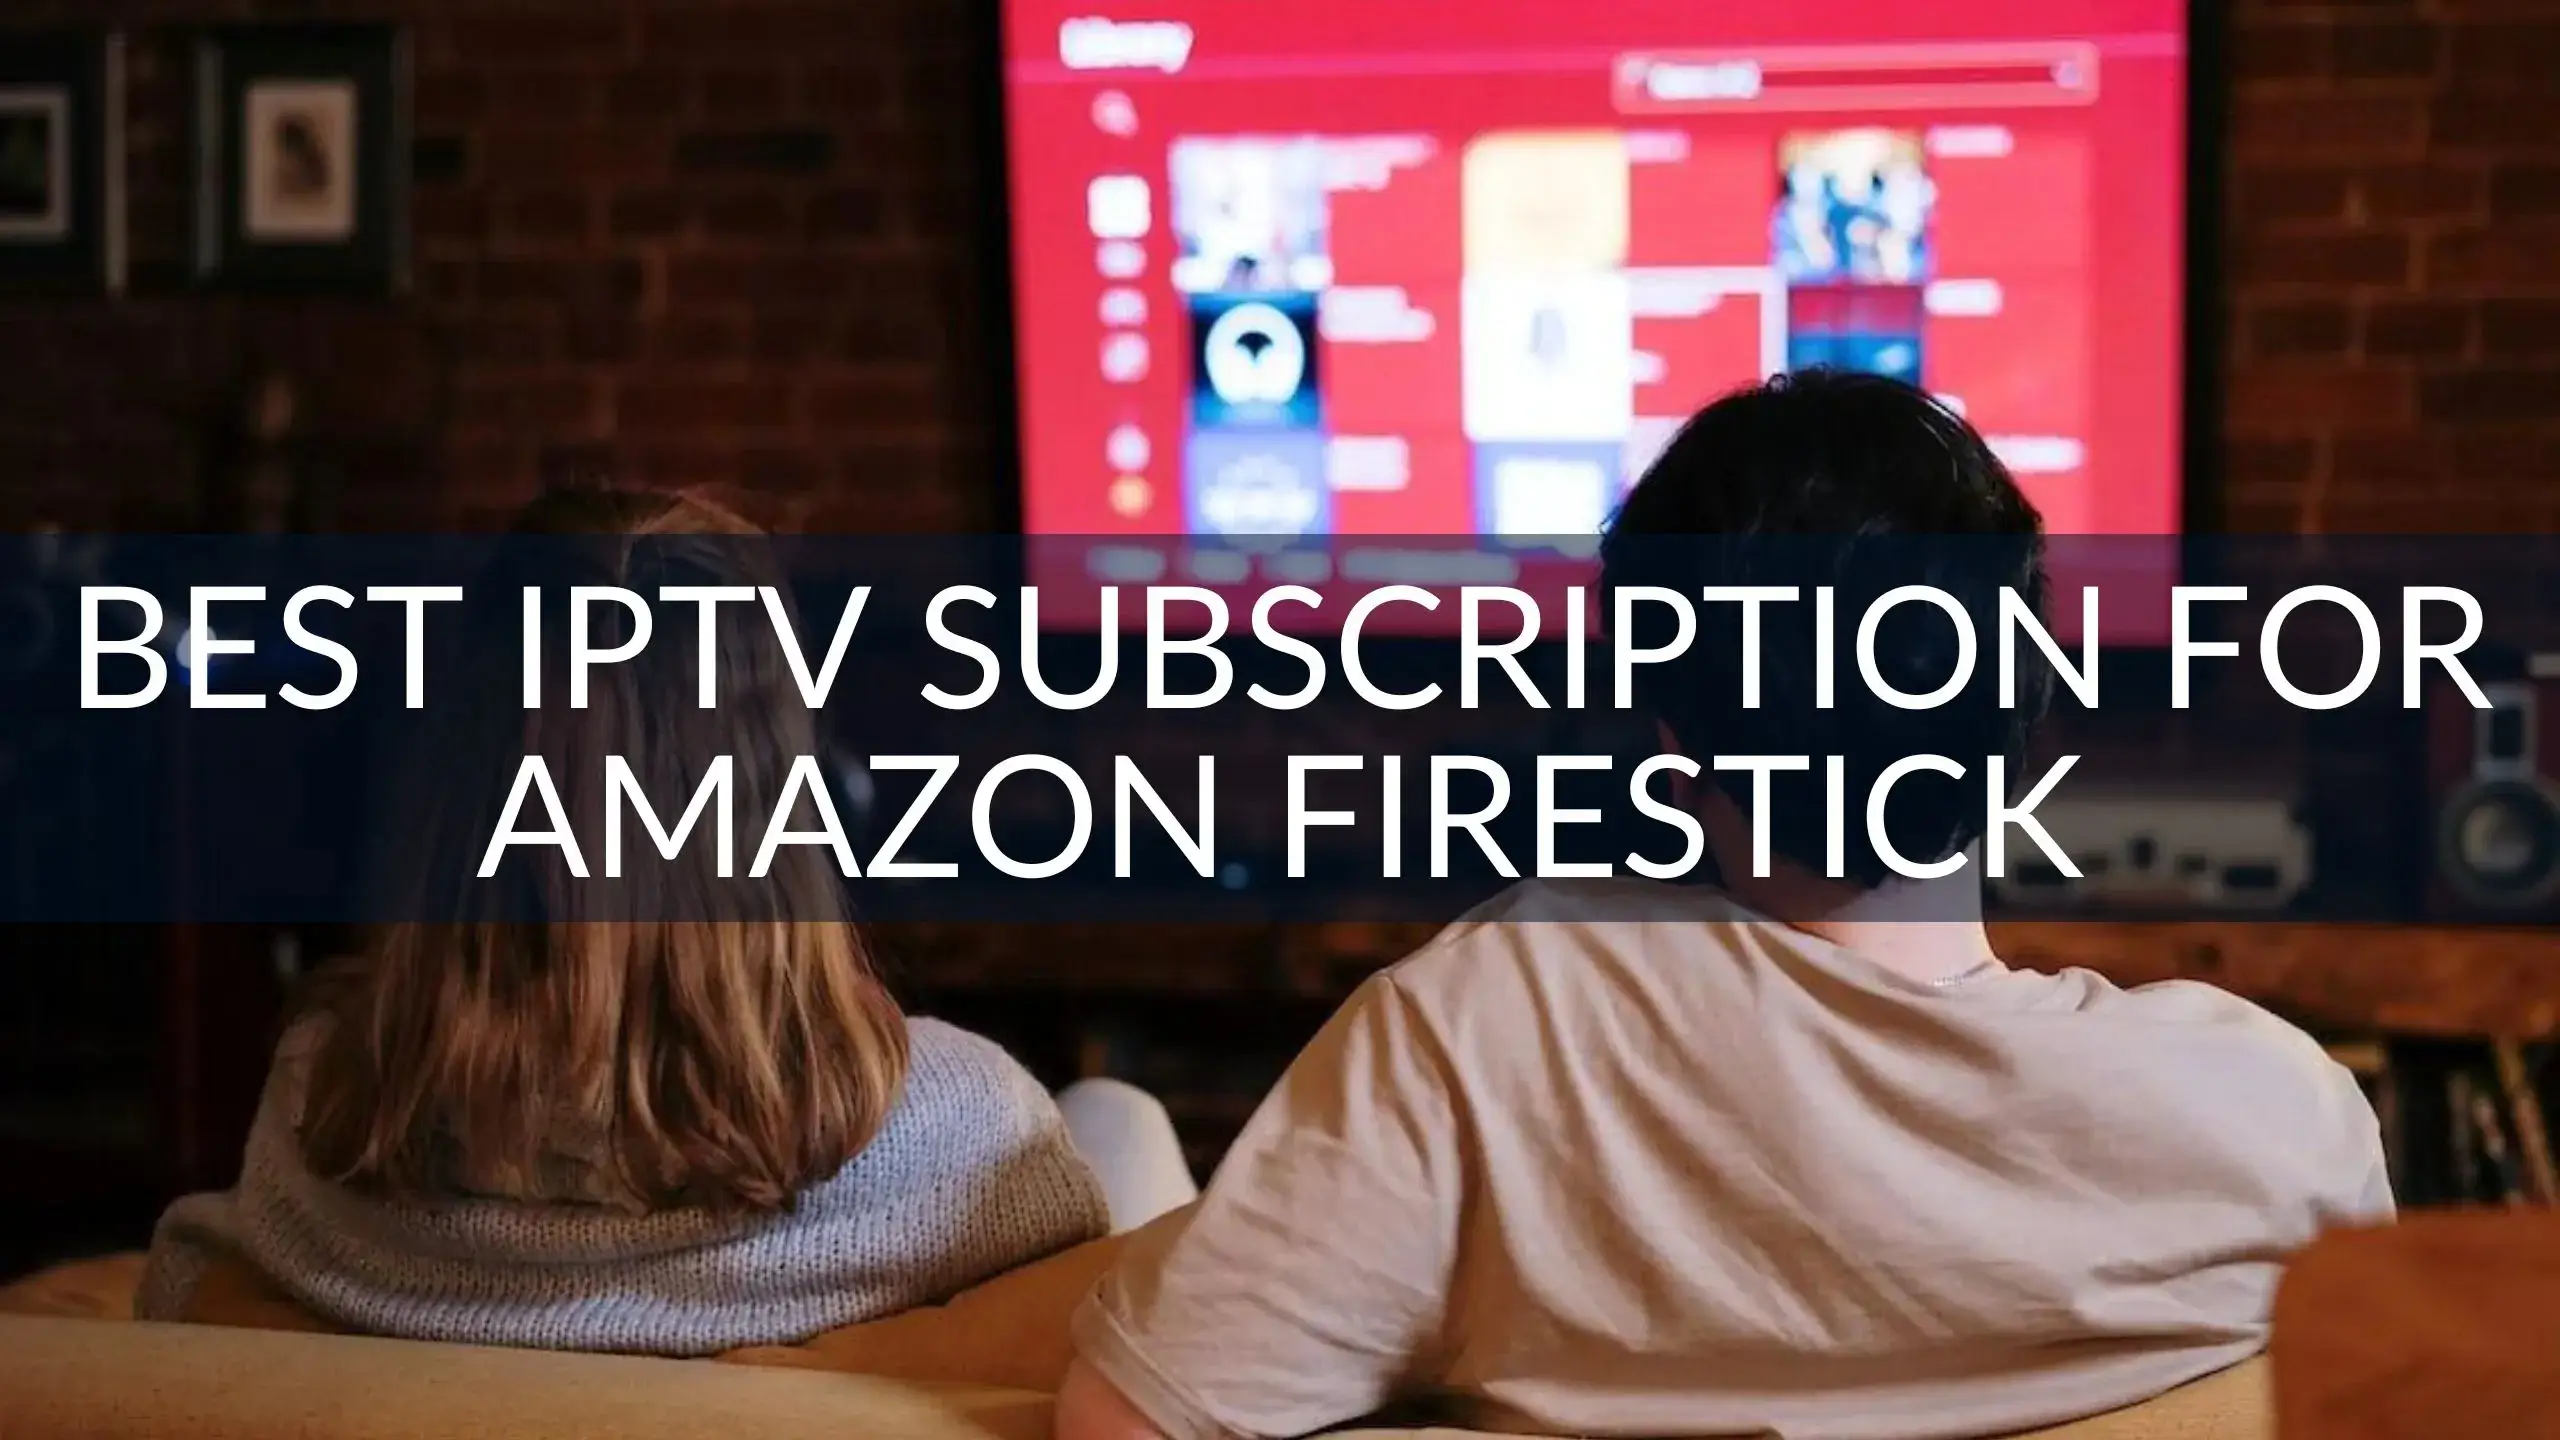 Best IPTV Subscription for Amazon Firestick